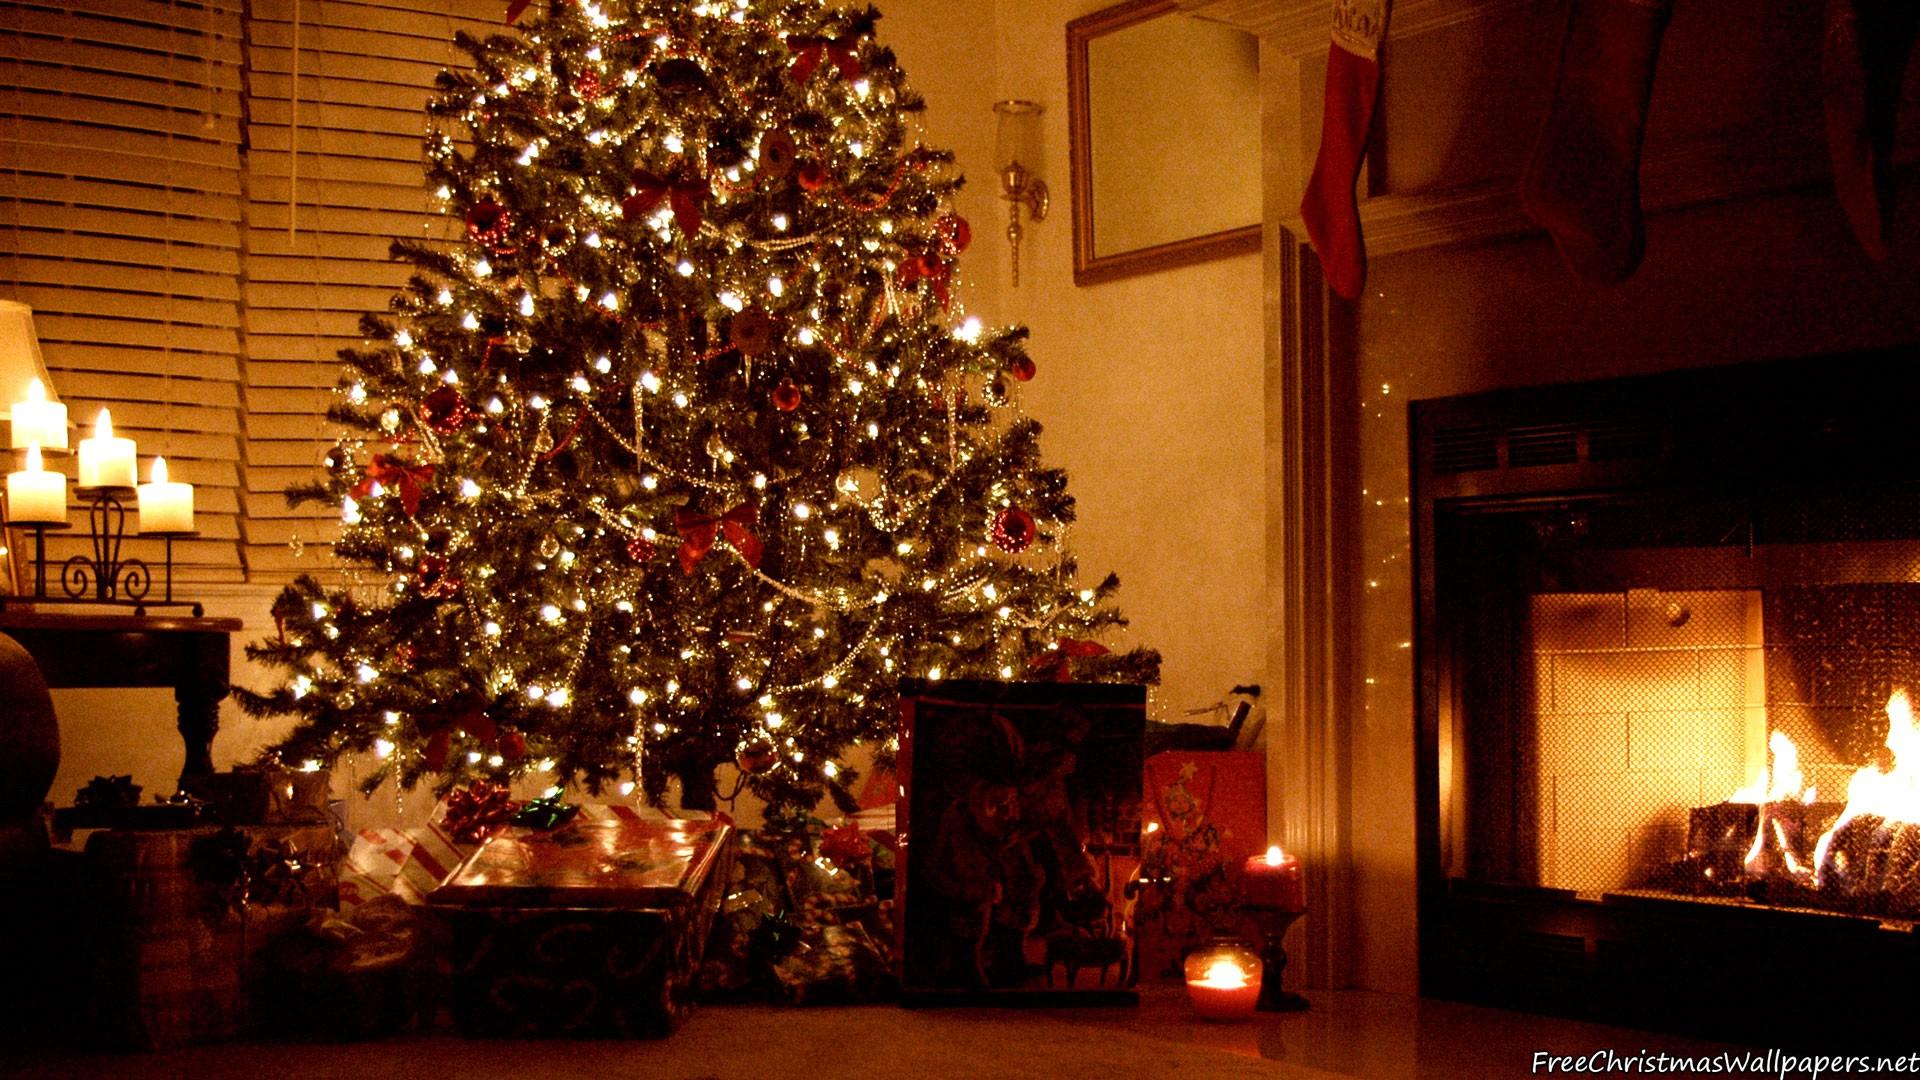 Christmas Fireplace 1920x1080 (1080p)